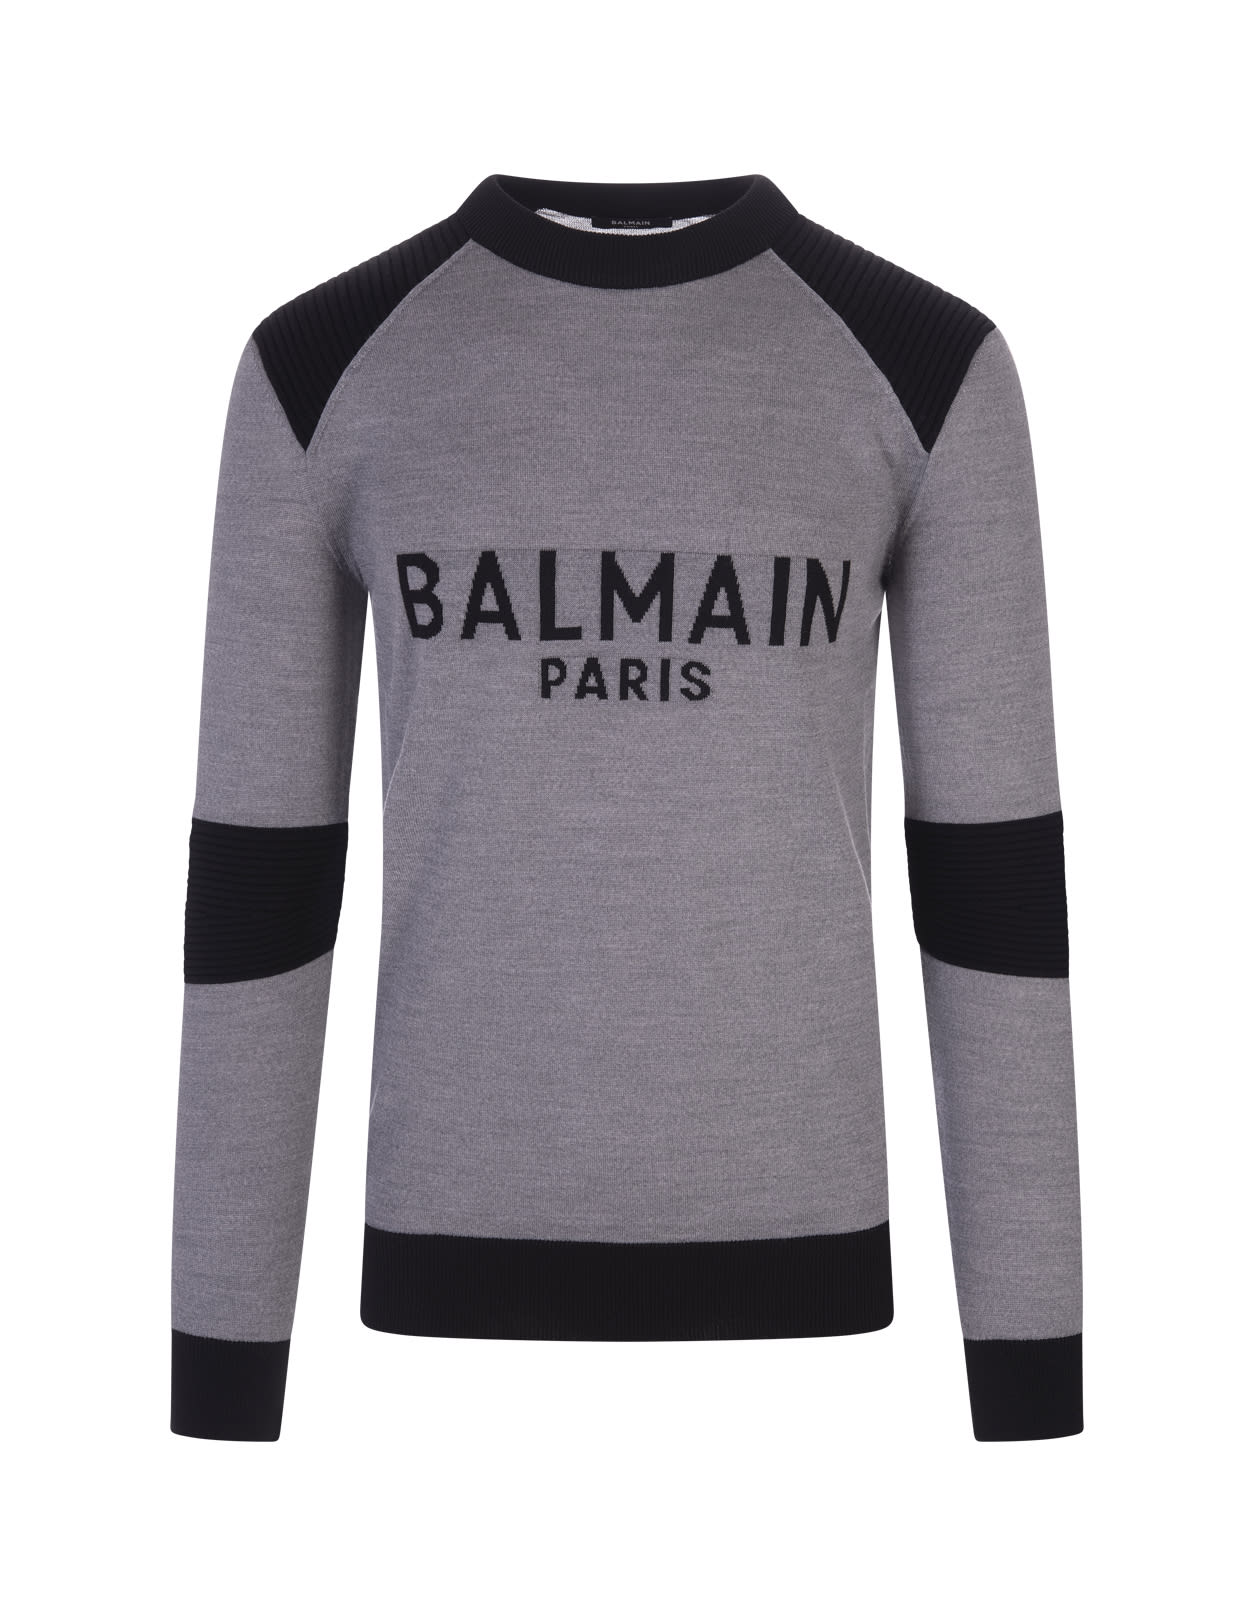 Man Grey Wool Sweater With Balmain Paris Logo